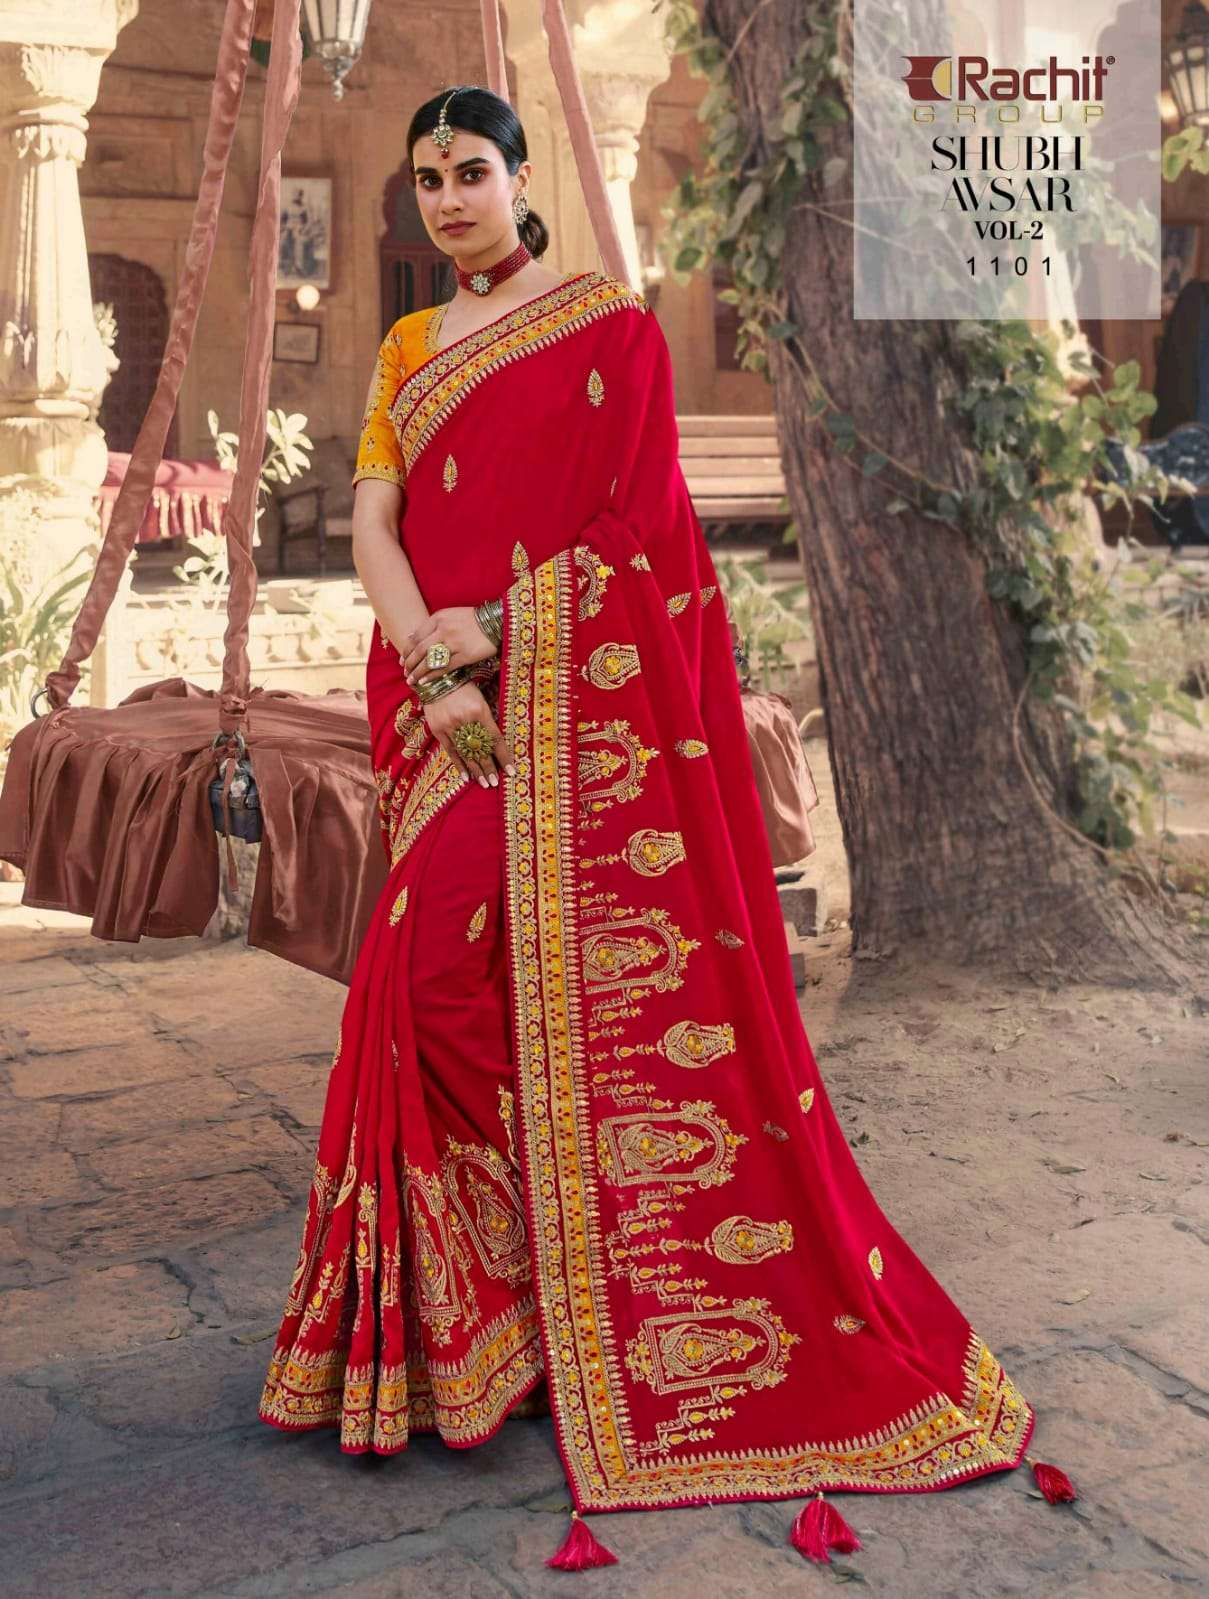 rachit fashion shubh avsar vol 2 1101-1114 series heavy work saris for wedding 